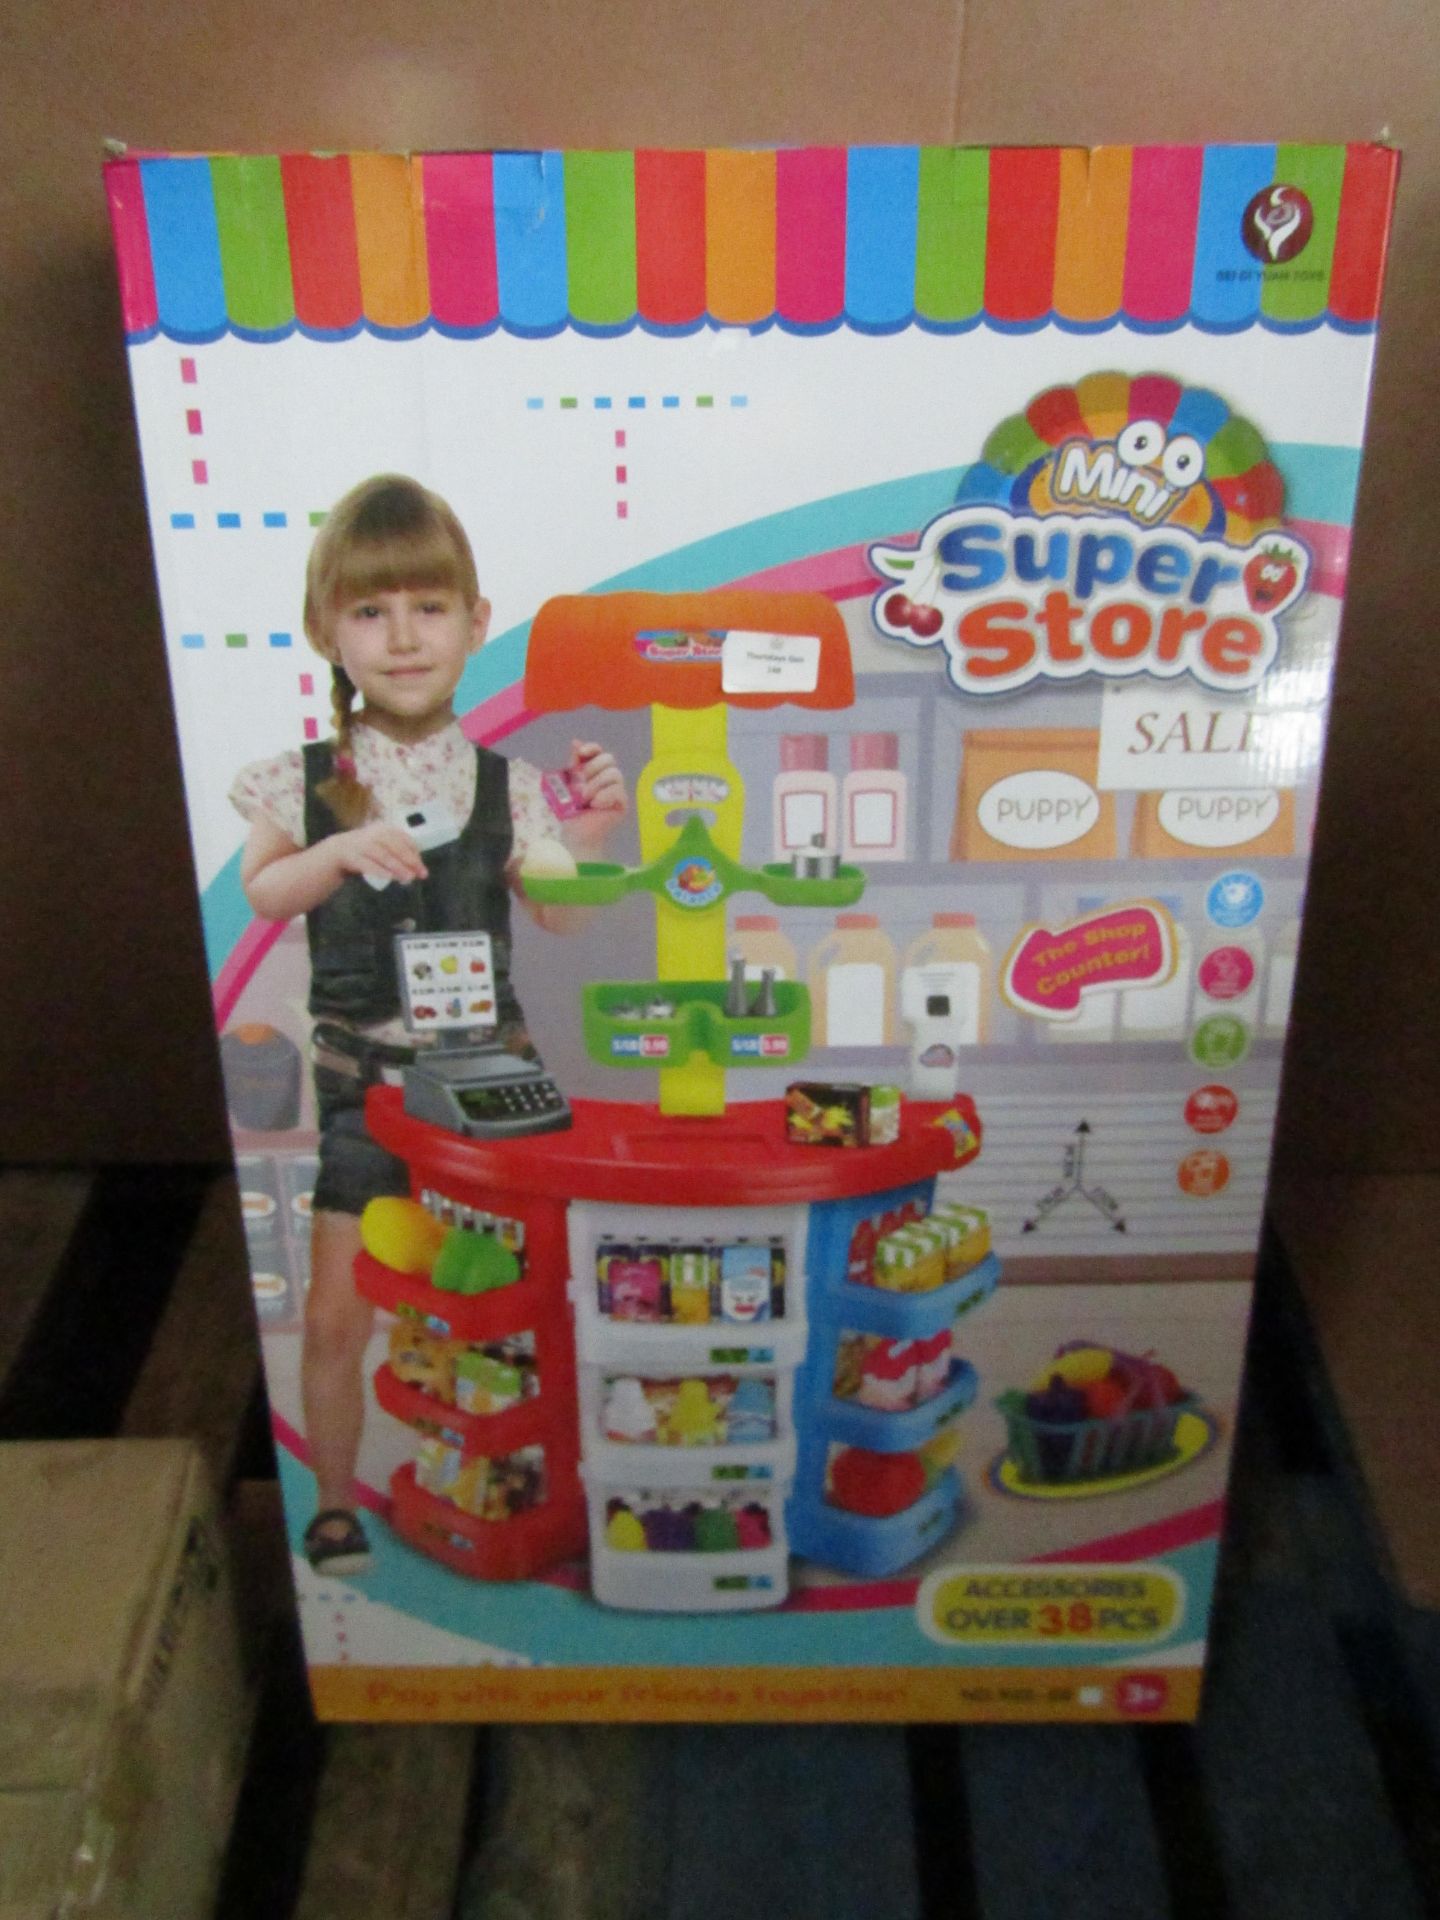 Kids Mini Super Store Shop Counter - Unchecked Show Room Sample.